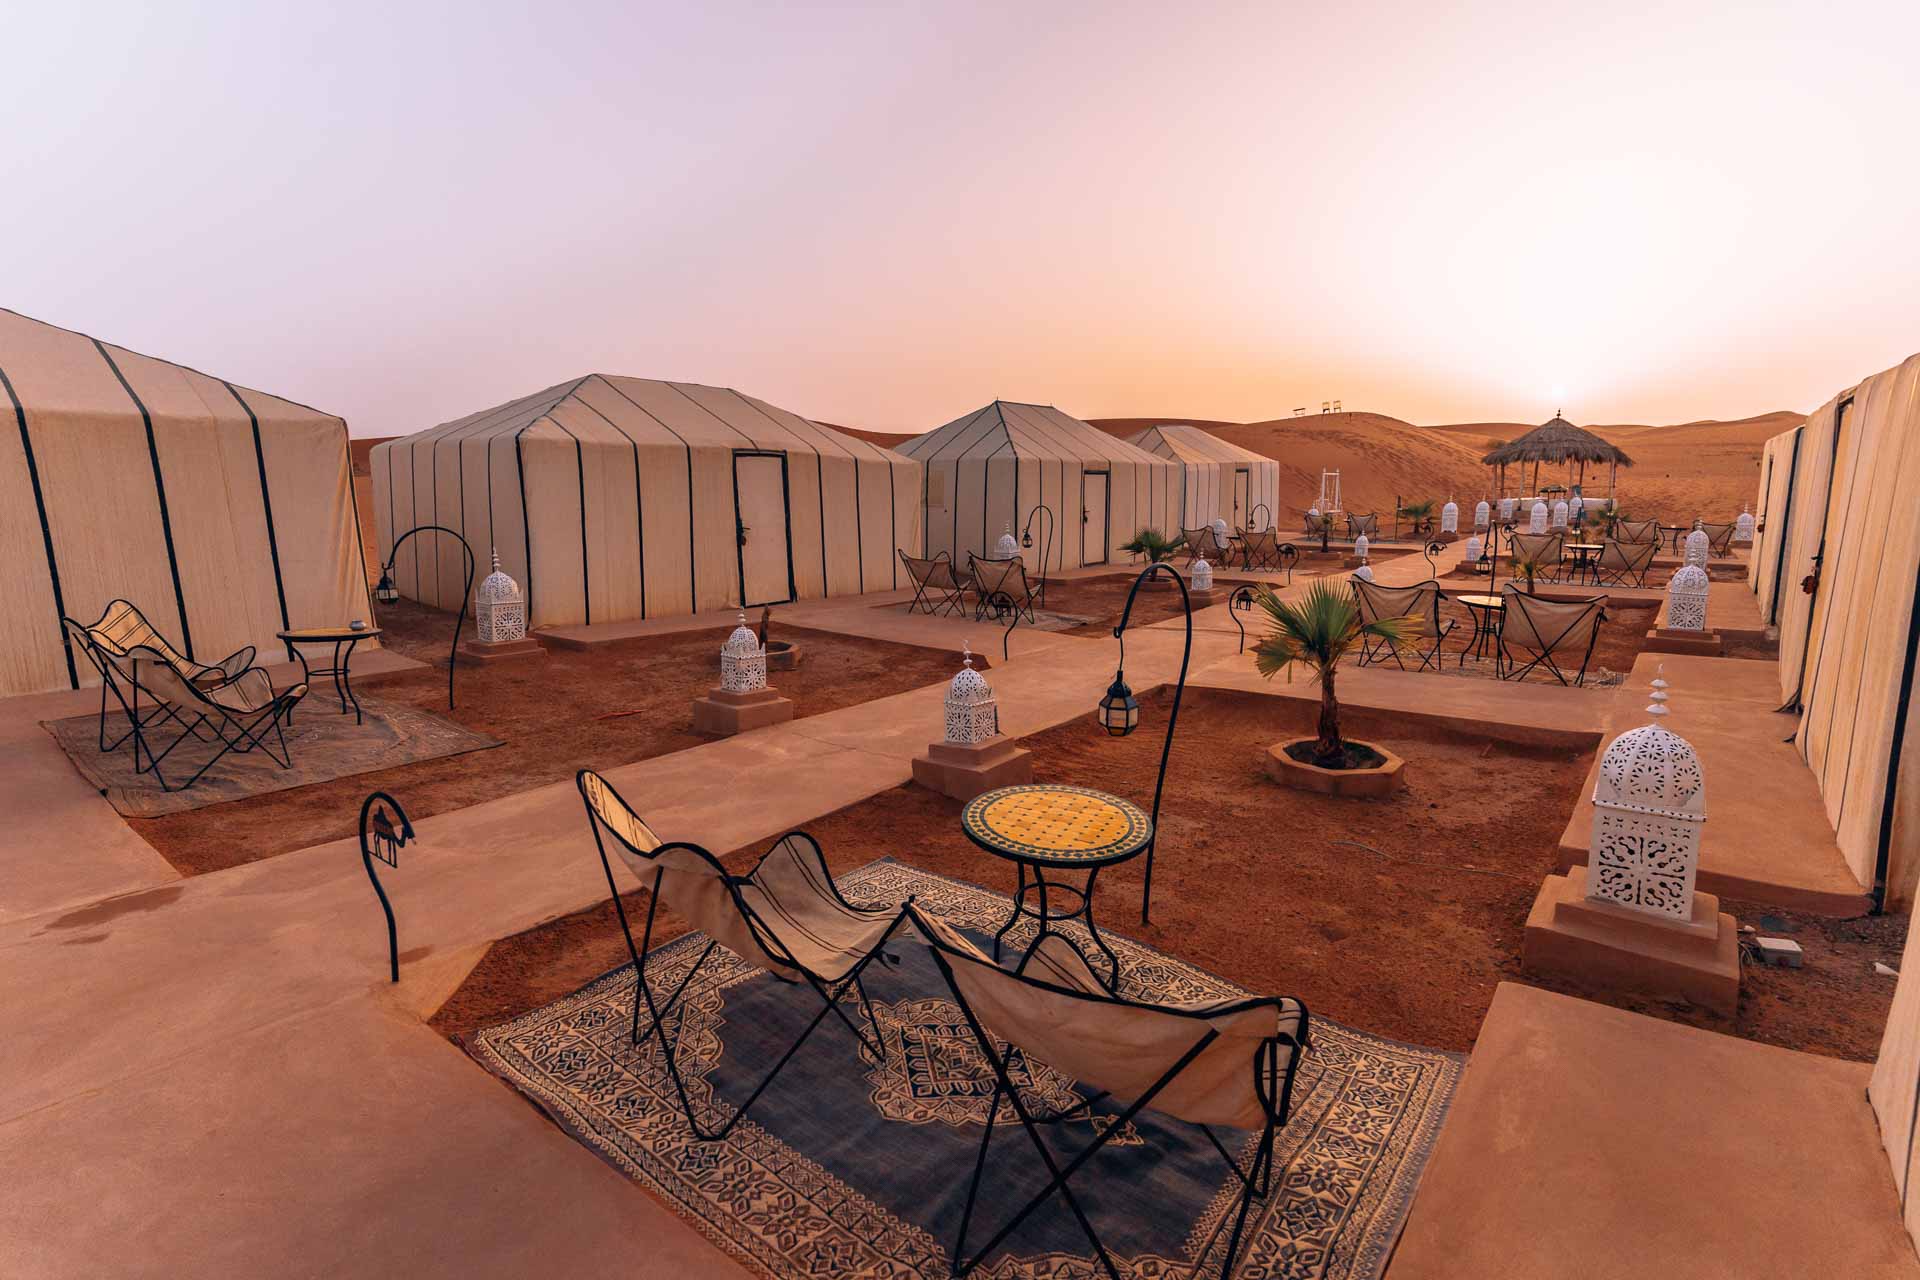 Sahara Luxury Desert Camp - sunset drive to the camp4- BLOGPOST HQ